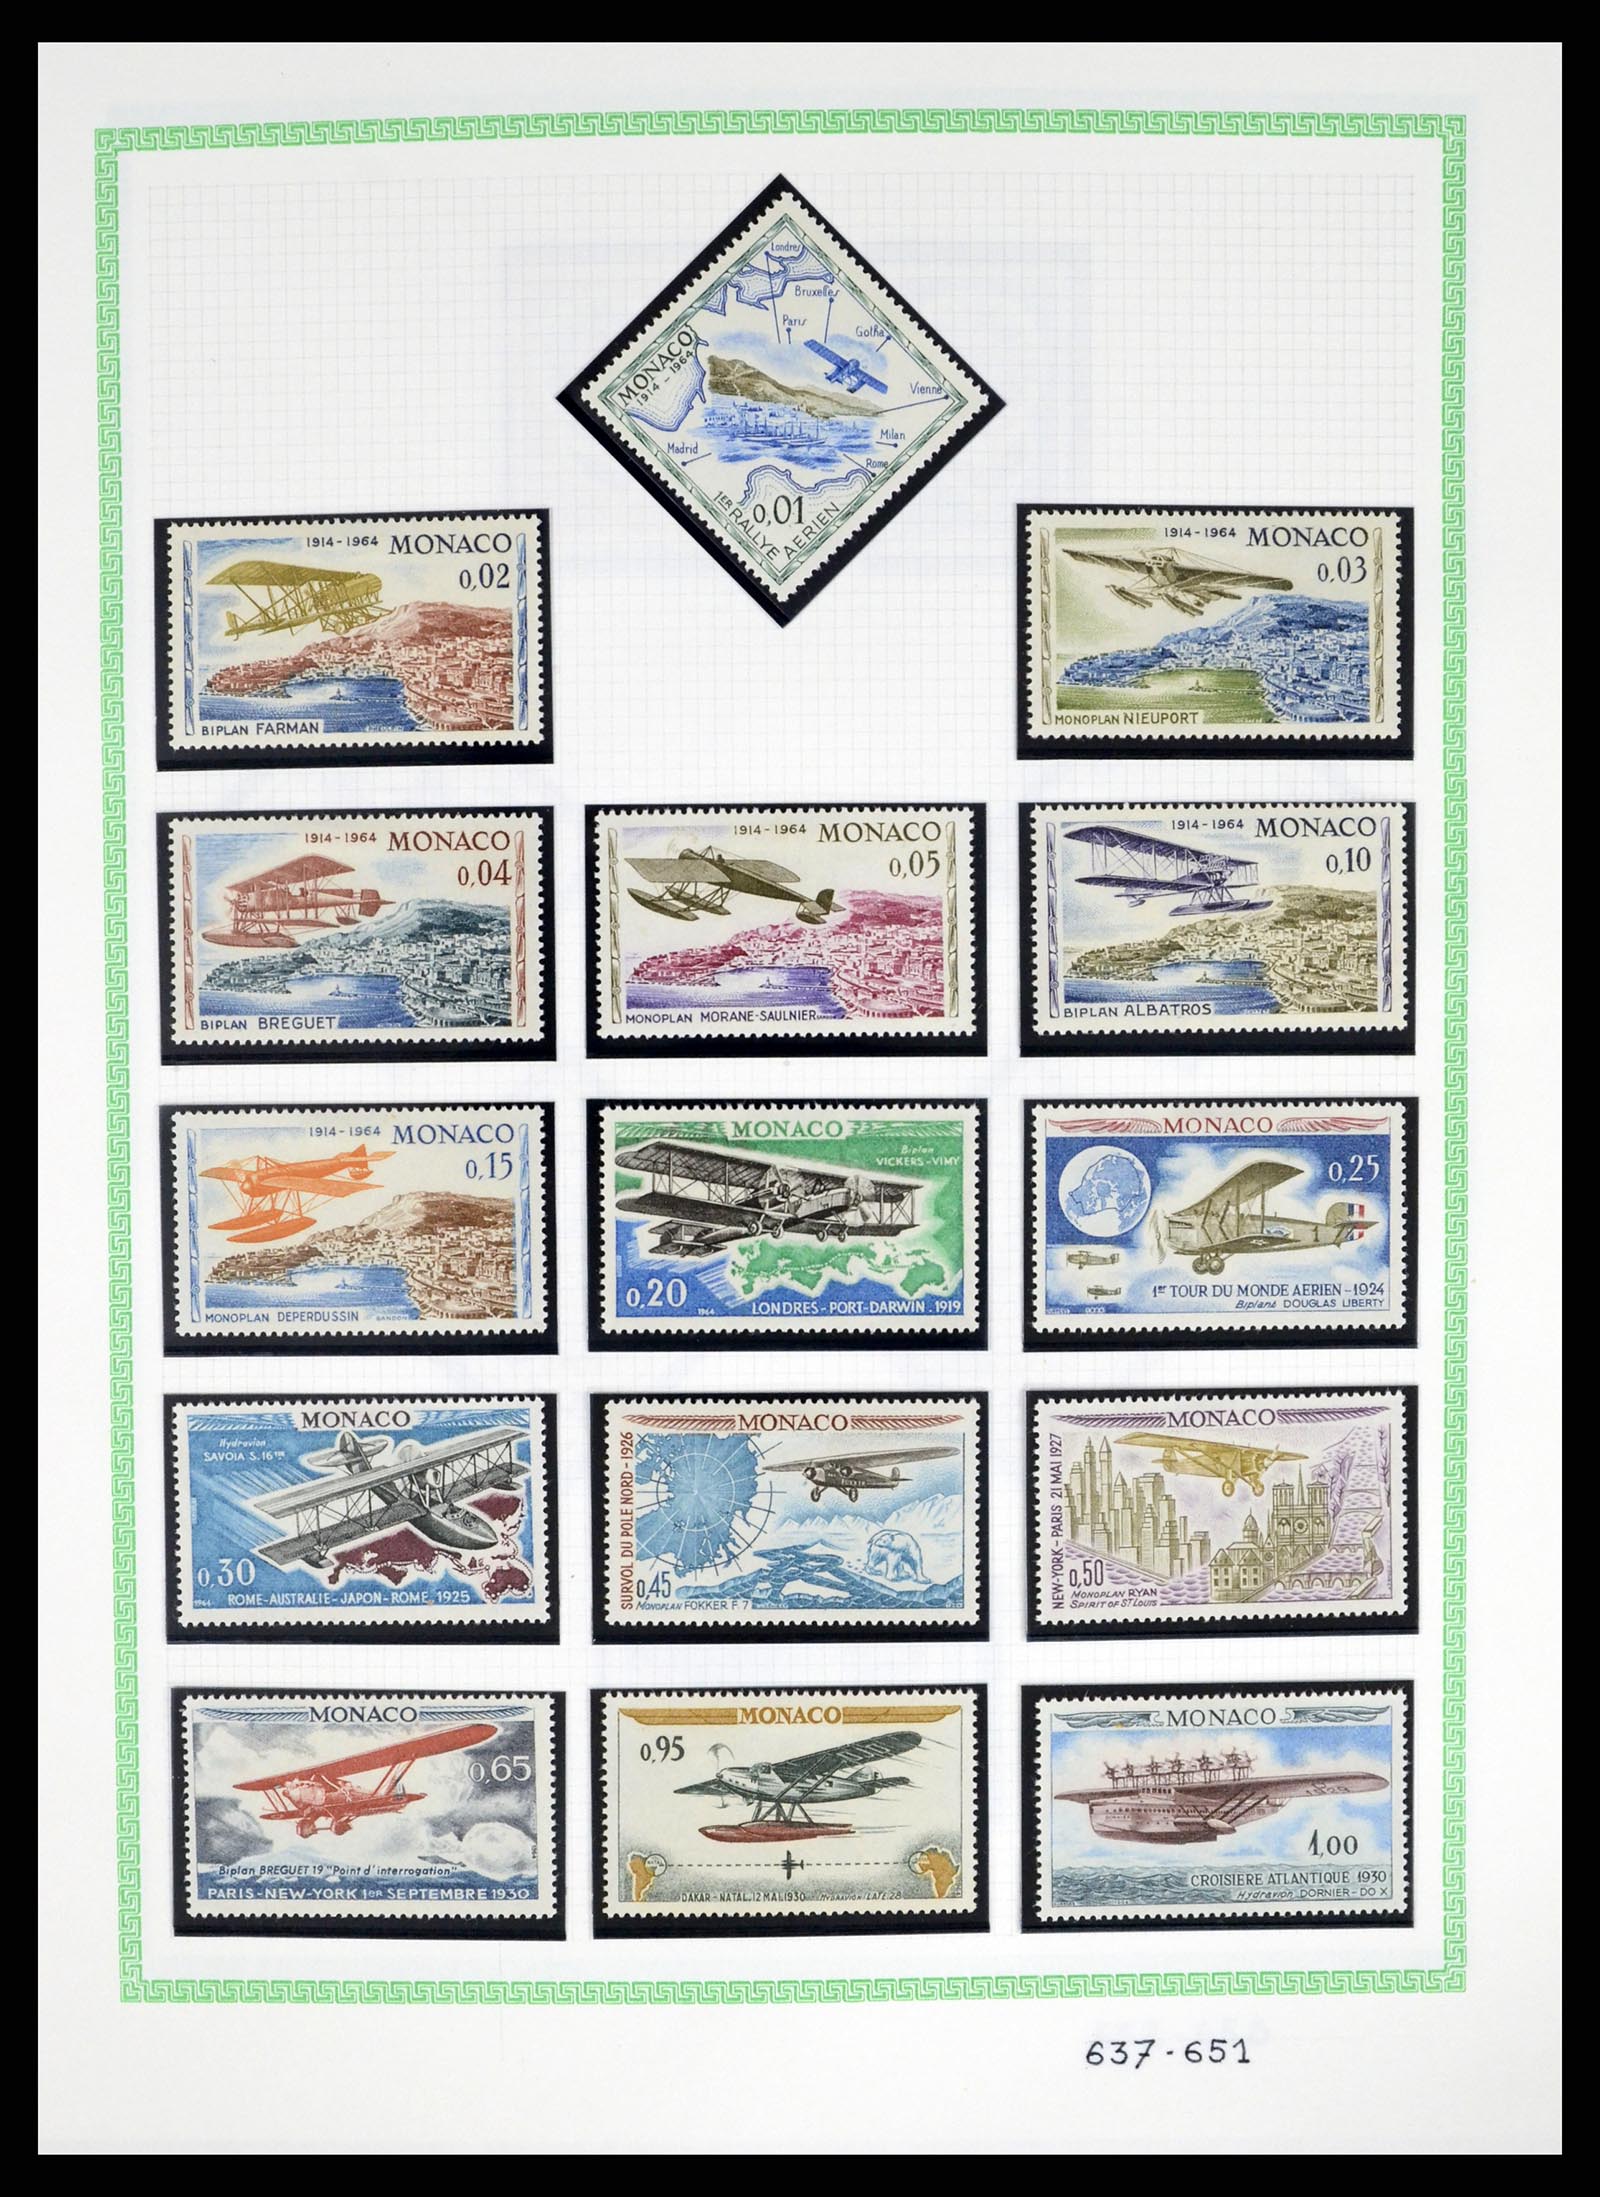 37380 060 - Stamp collection 37380 Monaco 1921-2015.